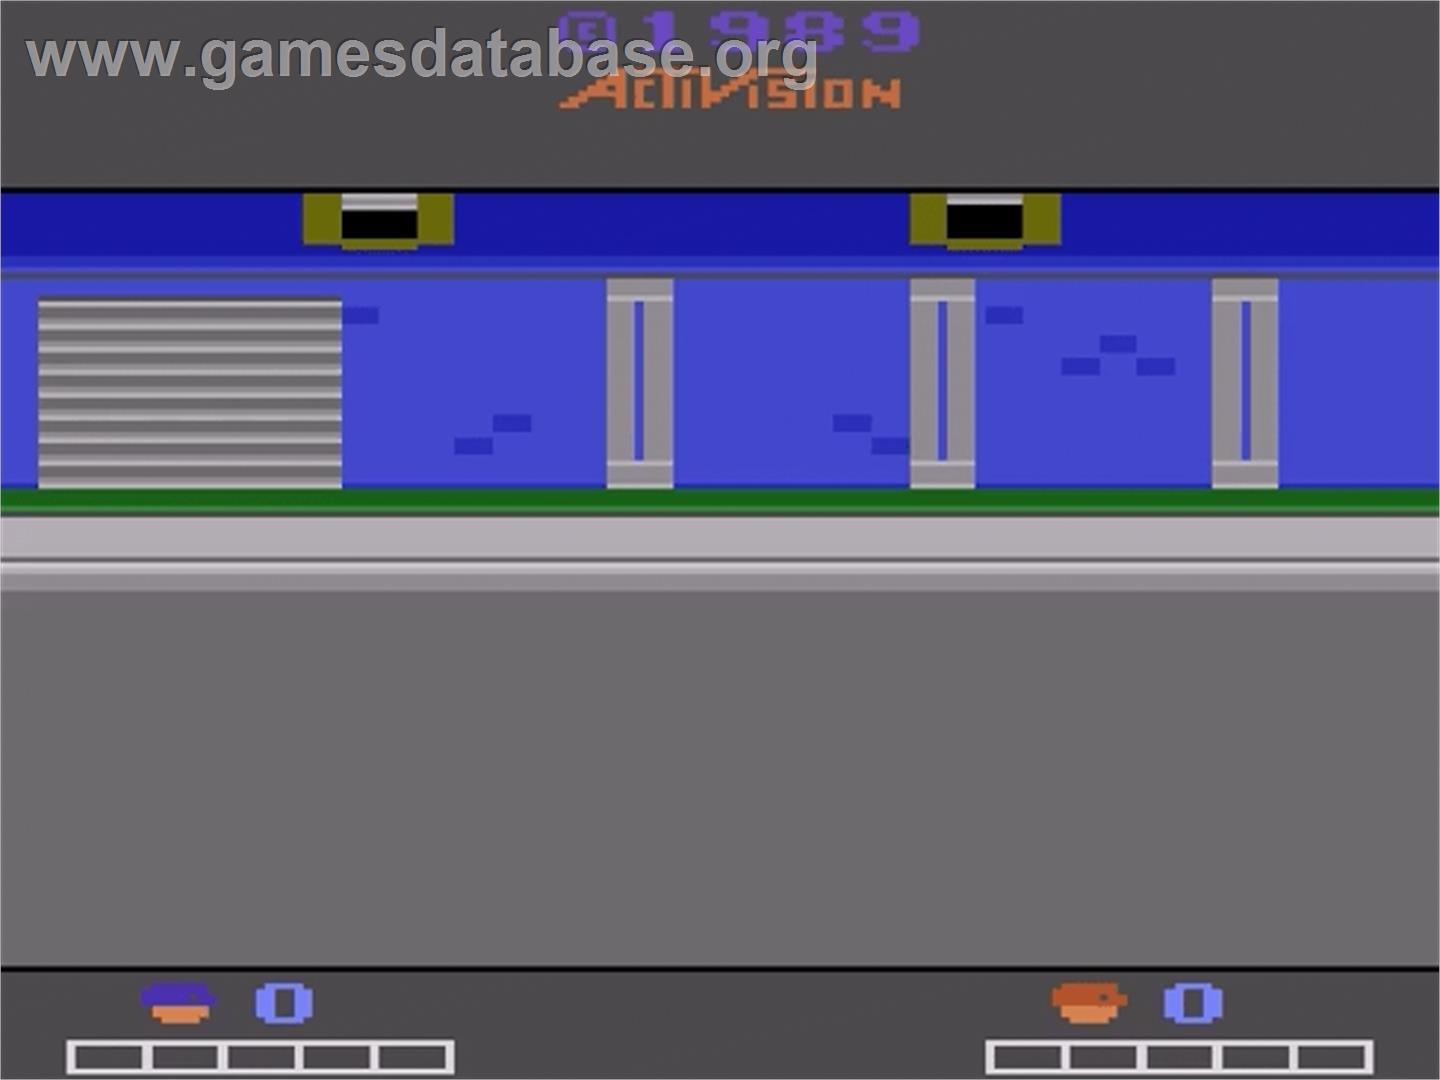 Double Dragon - Atari 2600 - Artwork - Title Screen